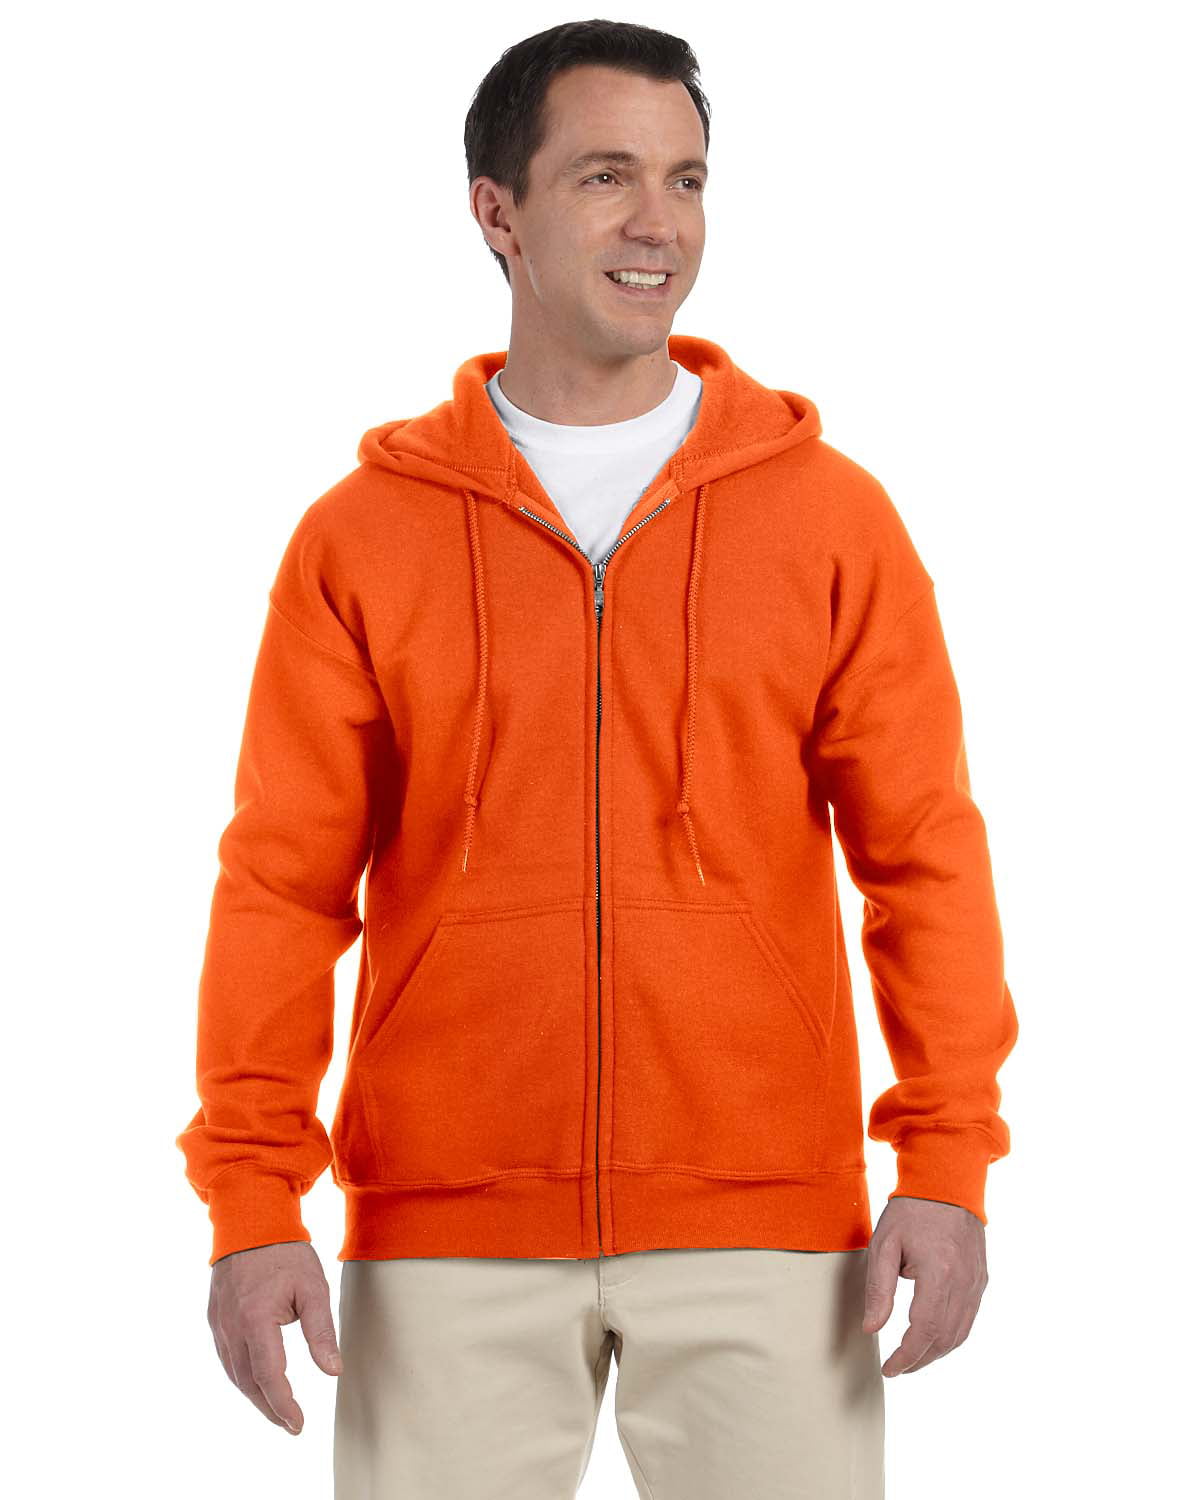 Gildan Mens Soft Pouch Pockets Full Zip Hooded Sweatshirt